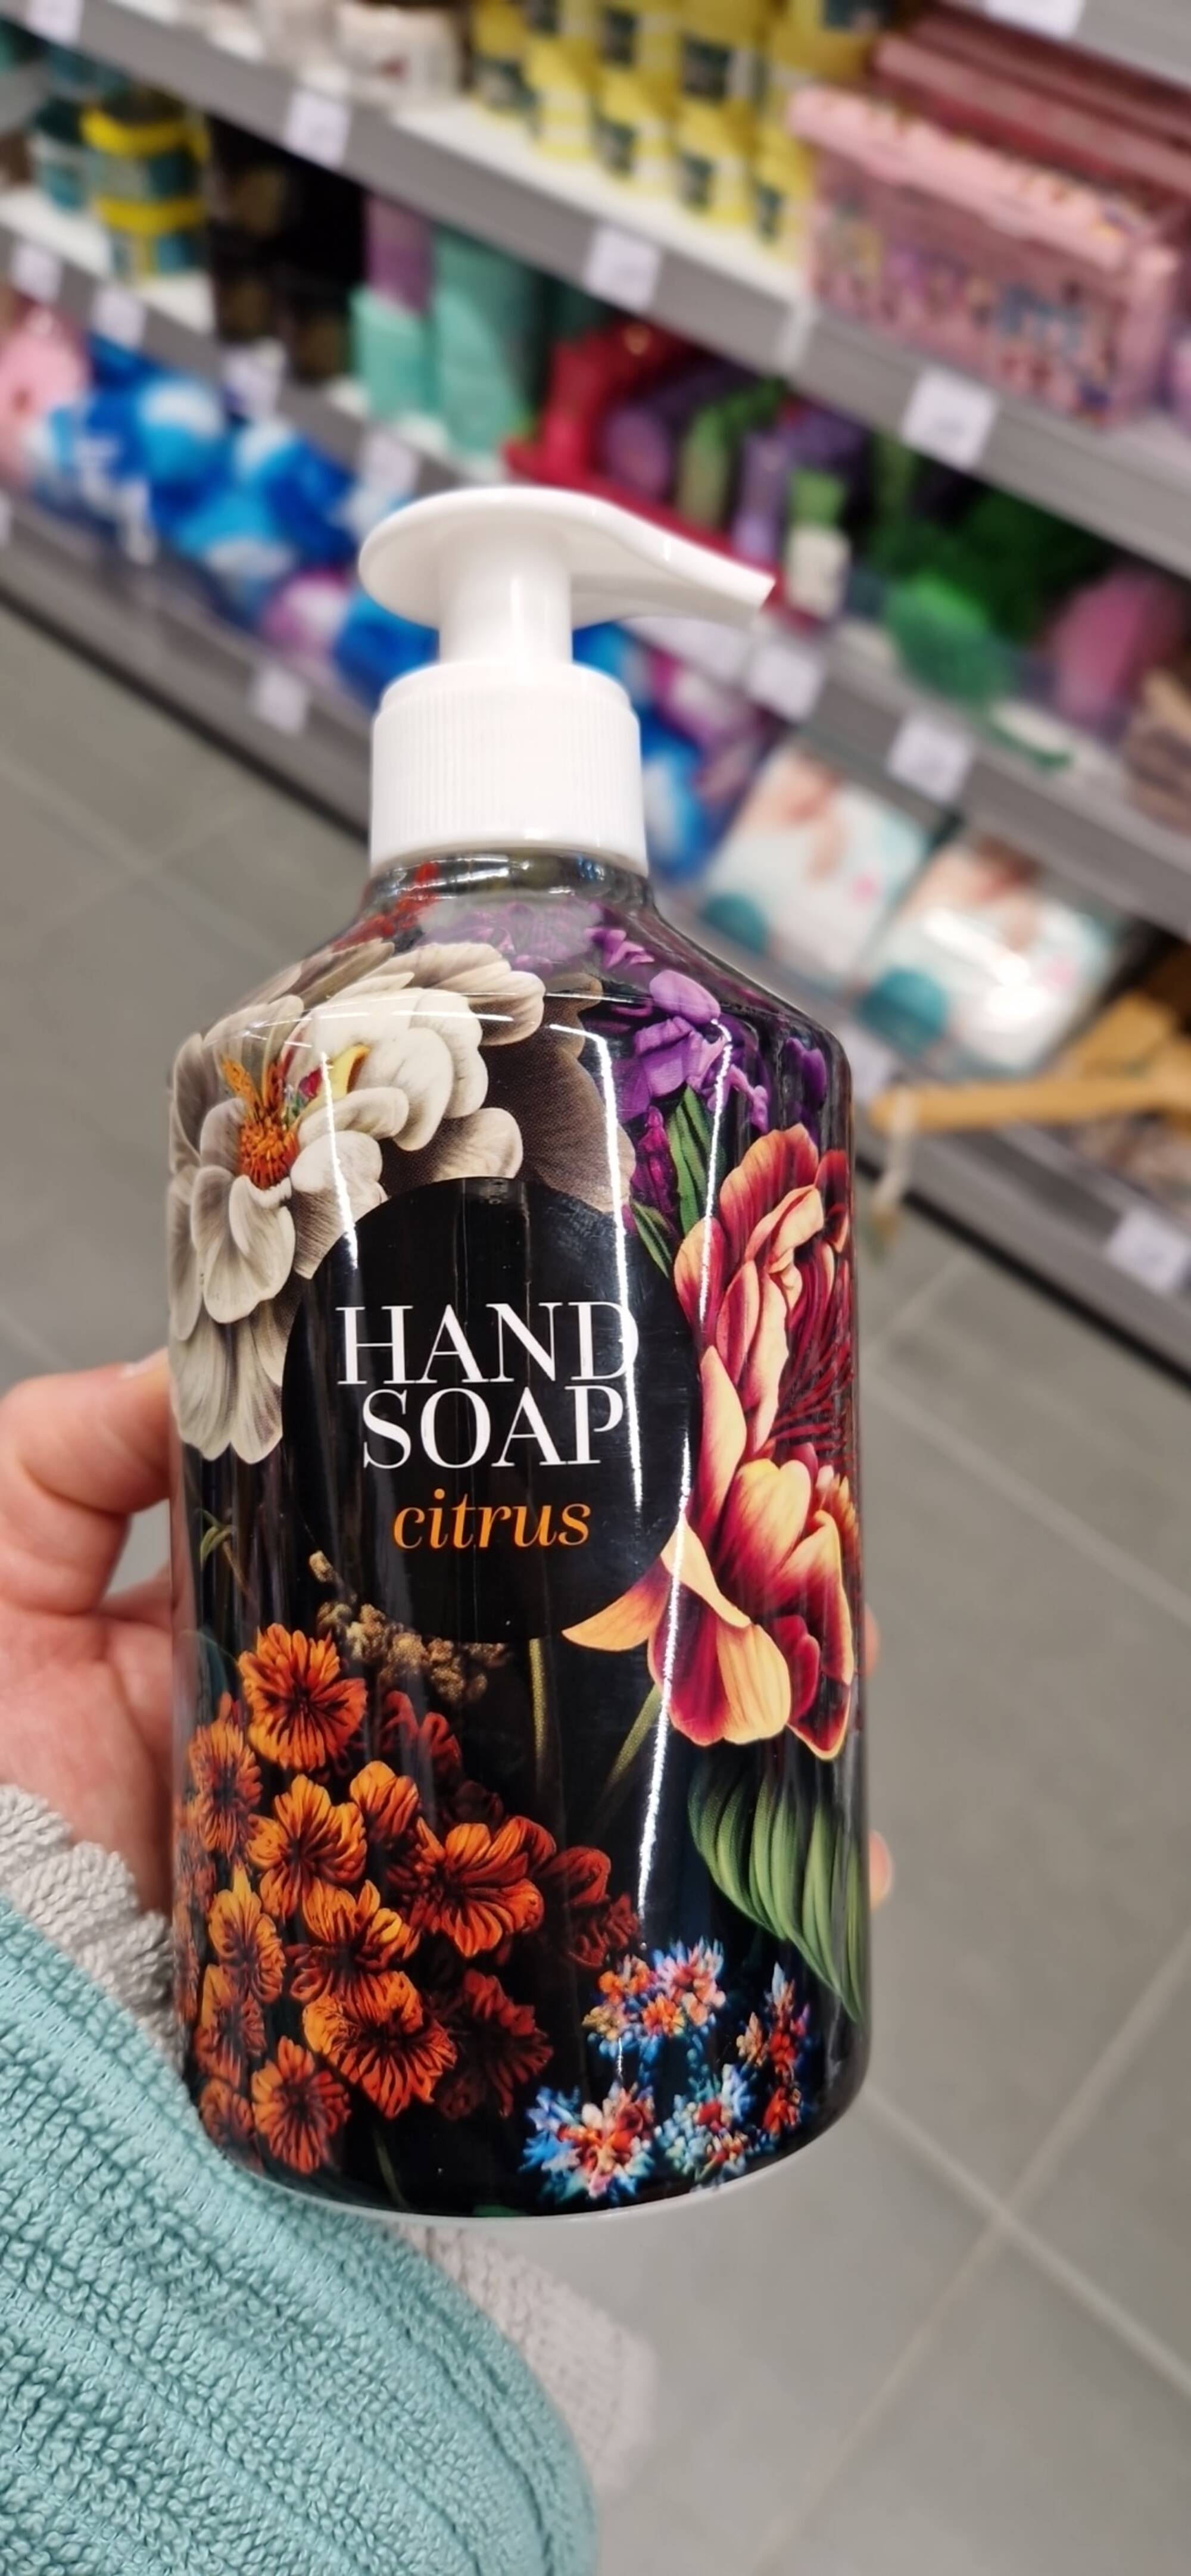 ORCHARD - Hand soap citrus